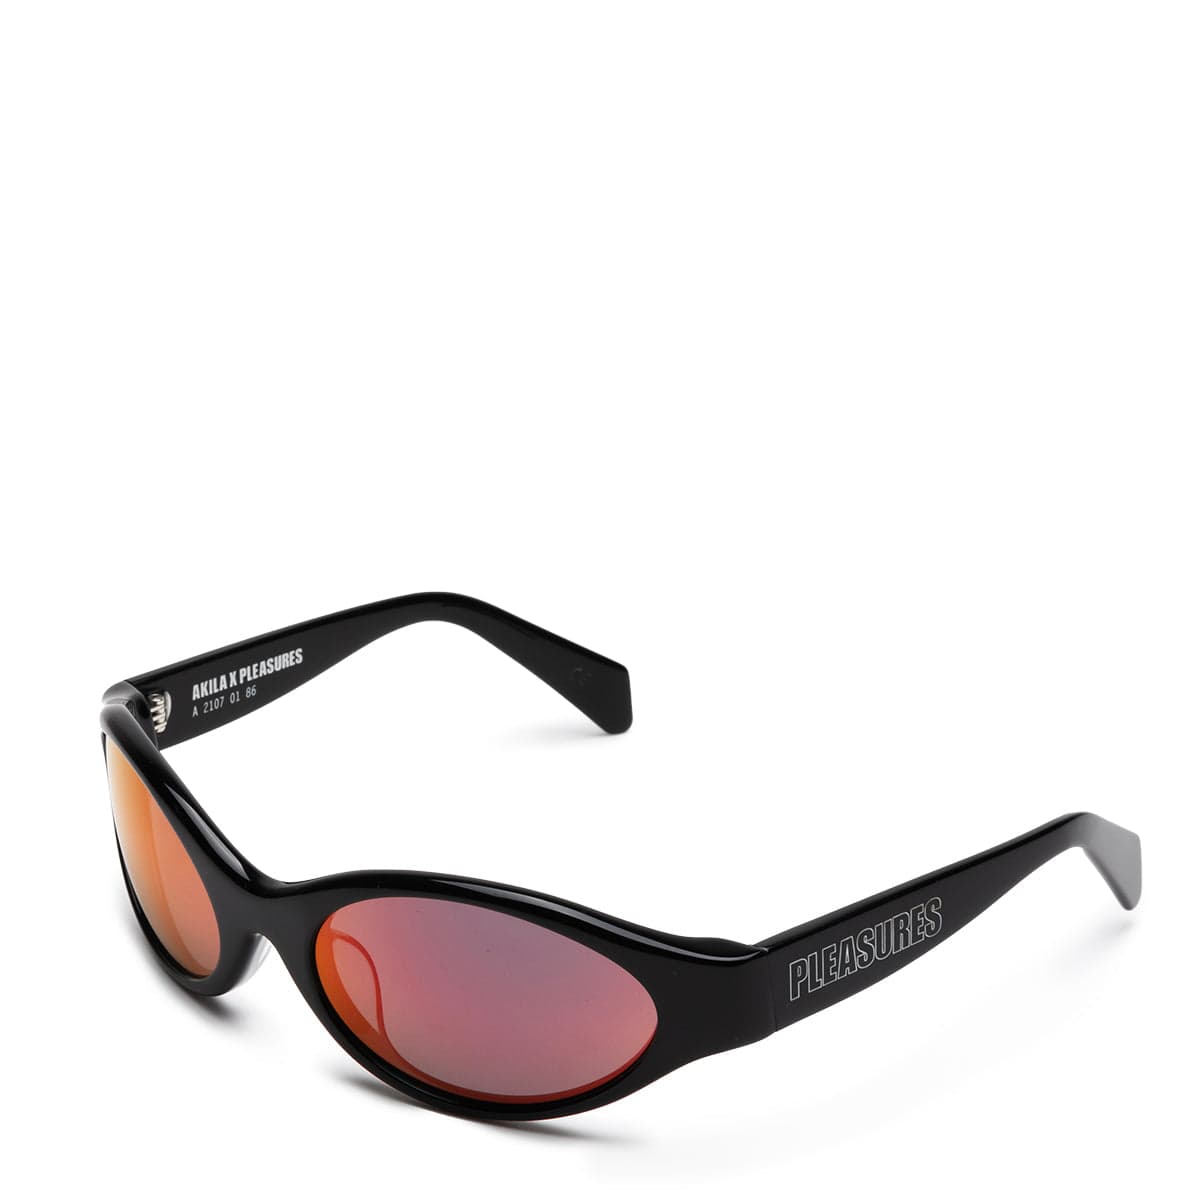 Native Sunglasses Mauritius Toolah Tigers Eye/ N3 Bronze Reflex New NIB |  eBay